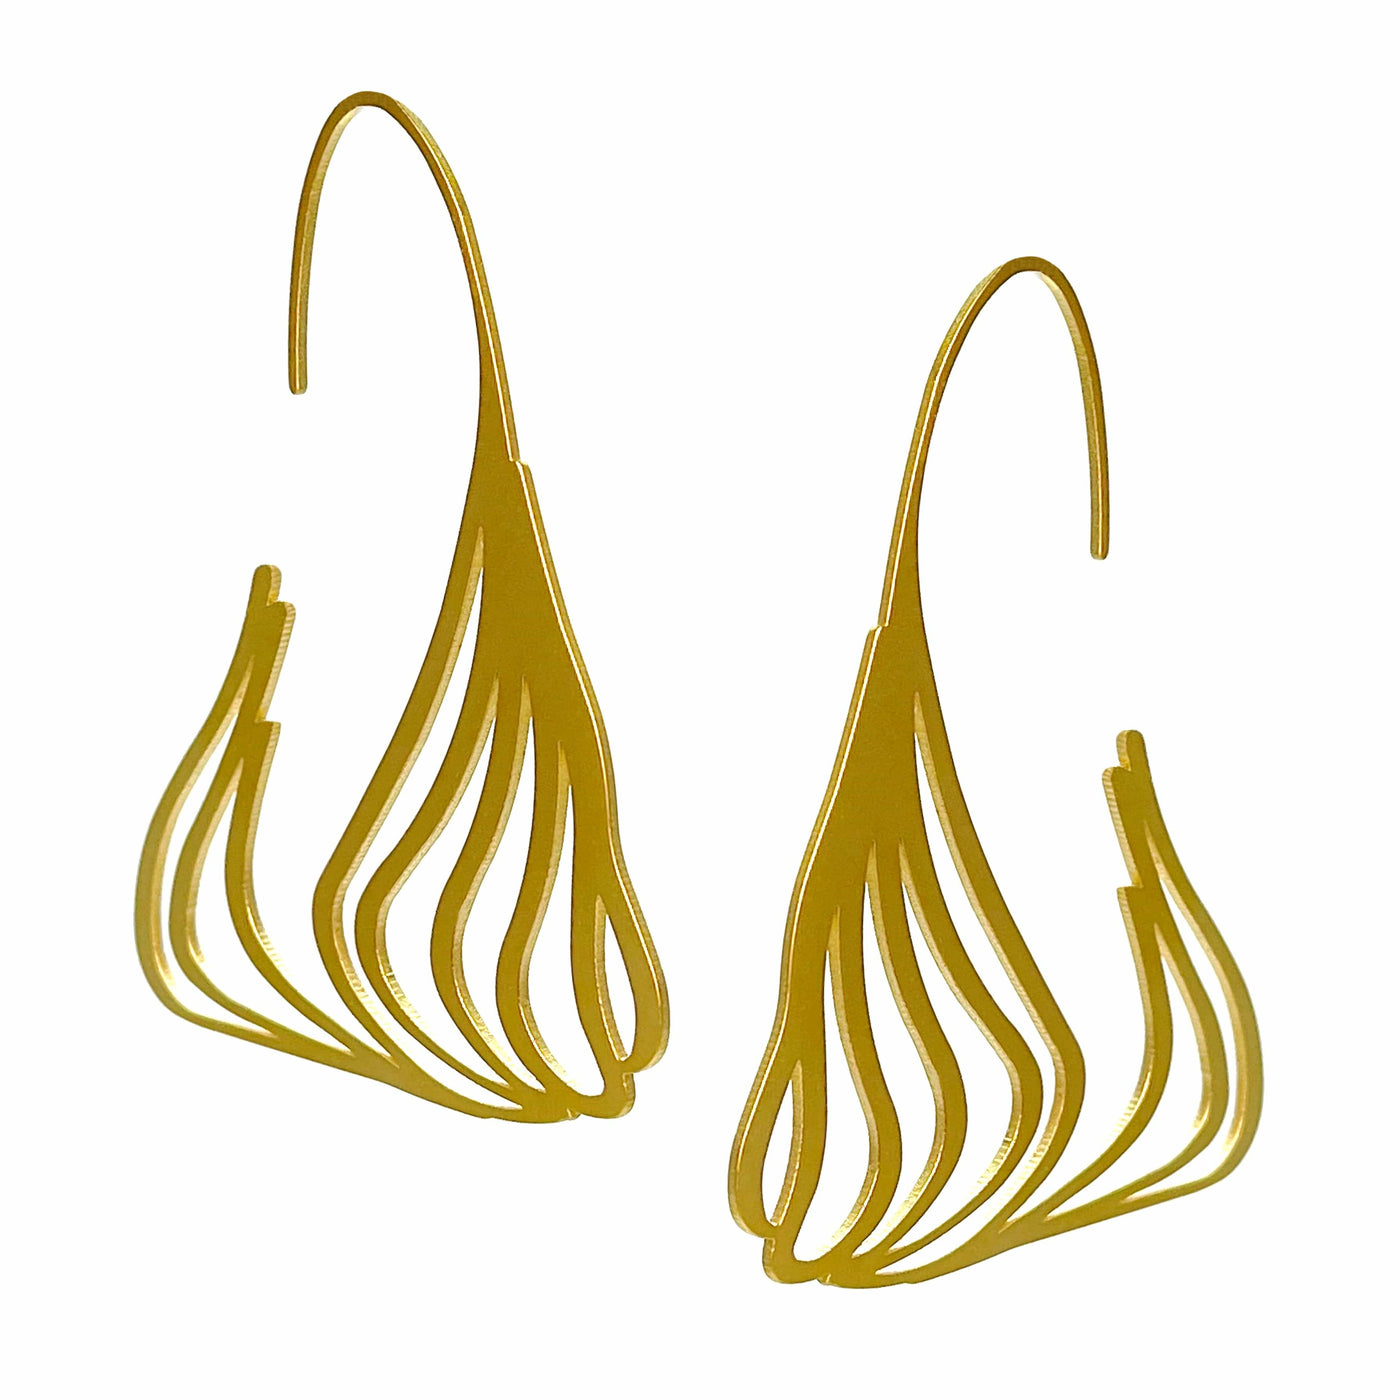 Trilogy Hoop Earrings - 22ct Matt Gold Plate - inSync design